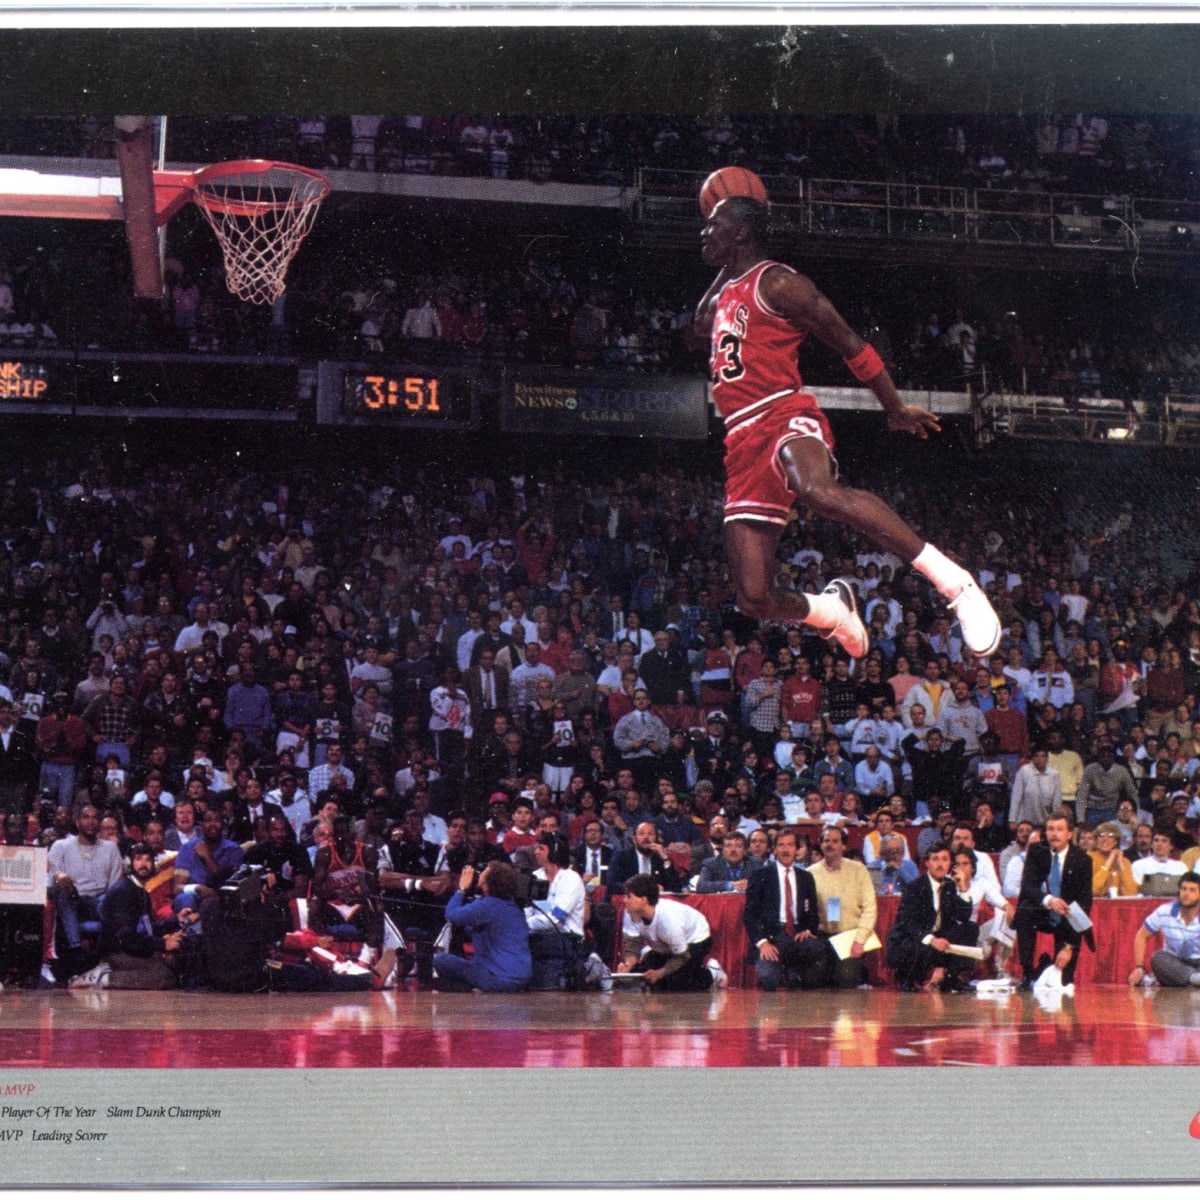 Nike Air Jordan Spike Lee Mars Poster Original 1989 DO YOU KNOW